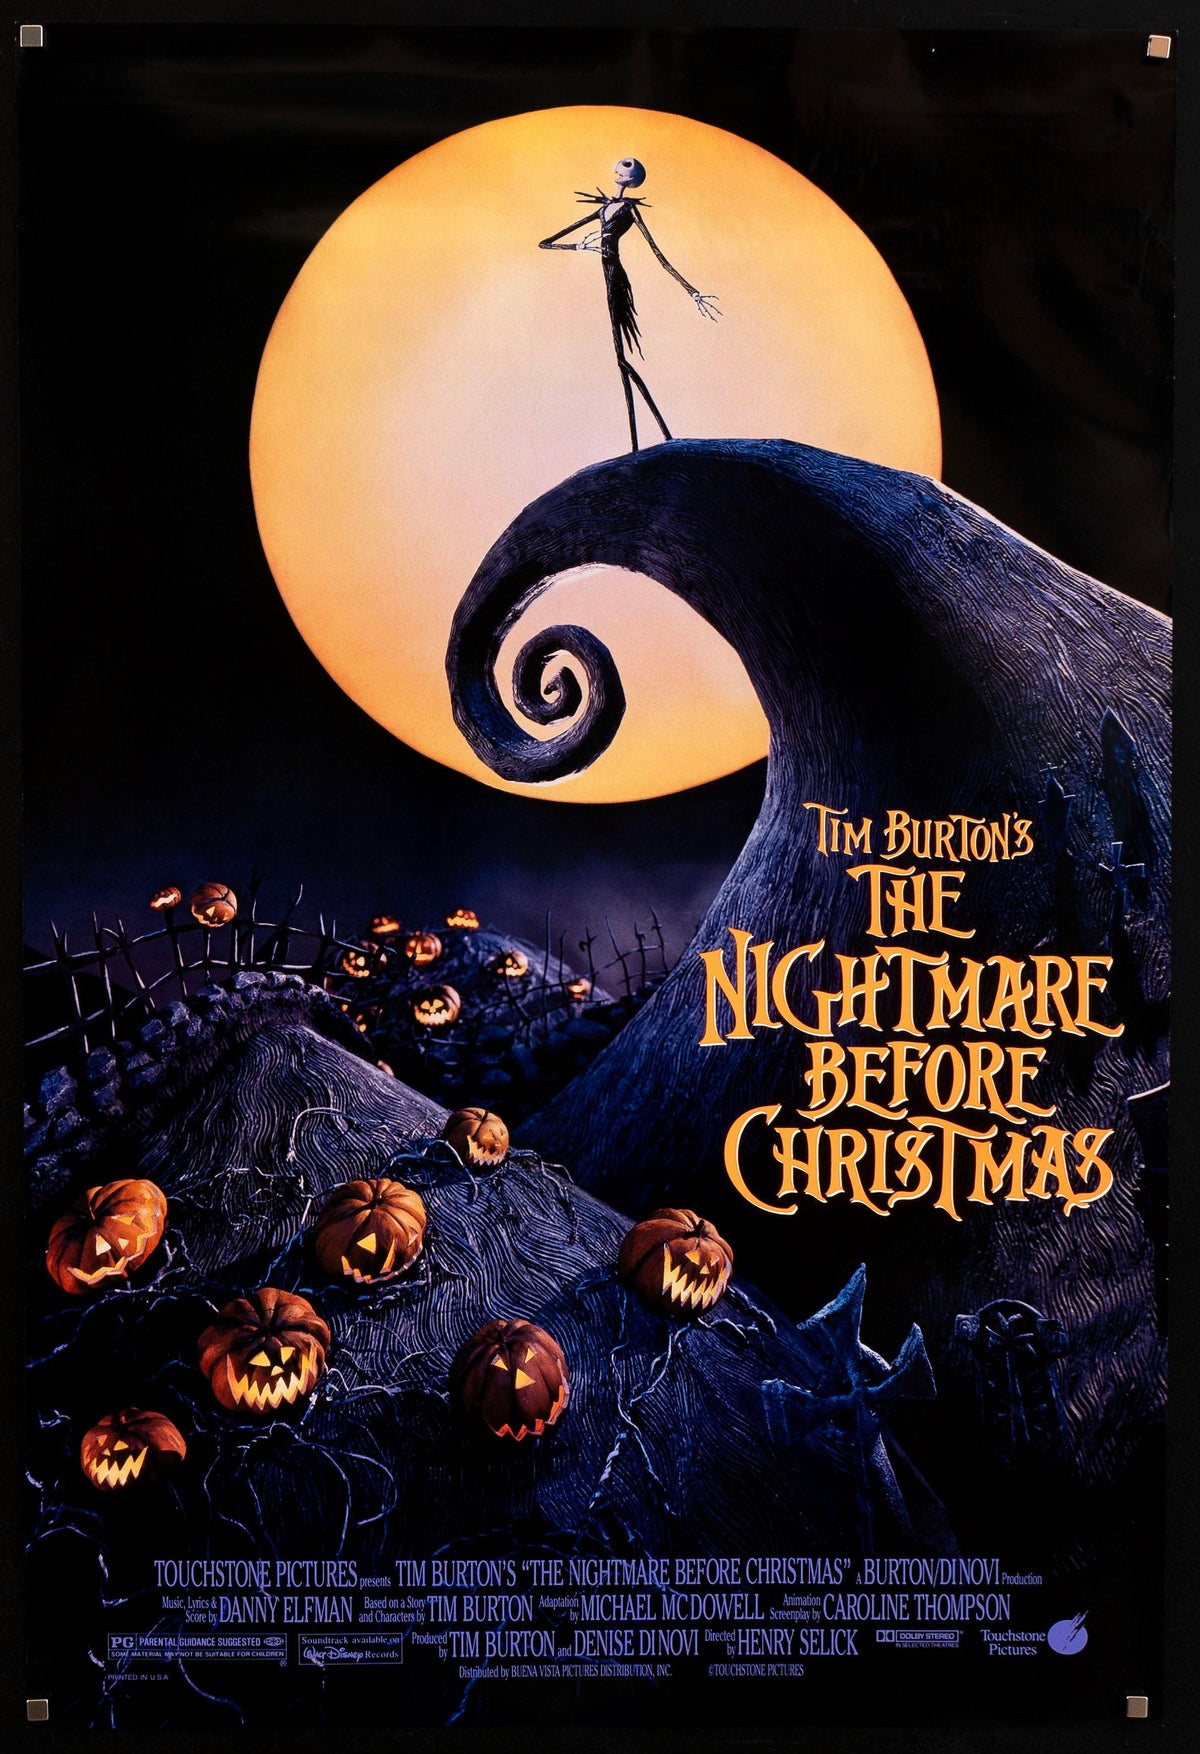 The Nightmare Before Christmas 1 Sheet (27x41) Original Vintage Movie Poster